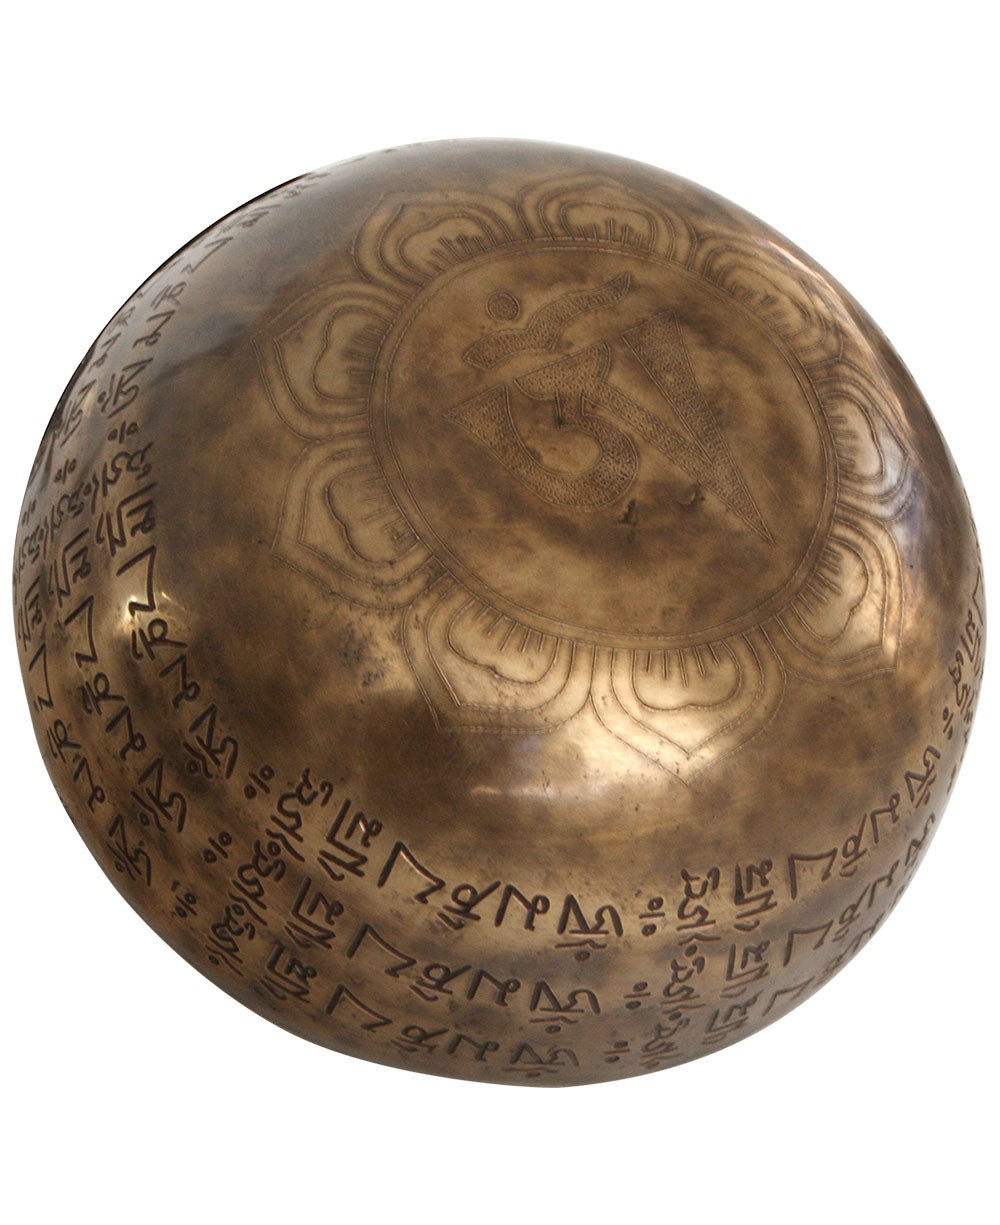 Premium Engraved Mantra Hand Hammered Singing Bowl - Hand Bells & Chimes